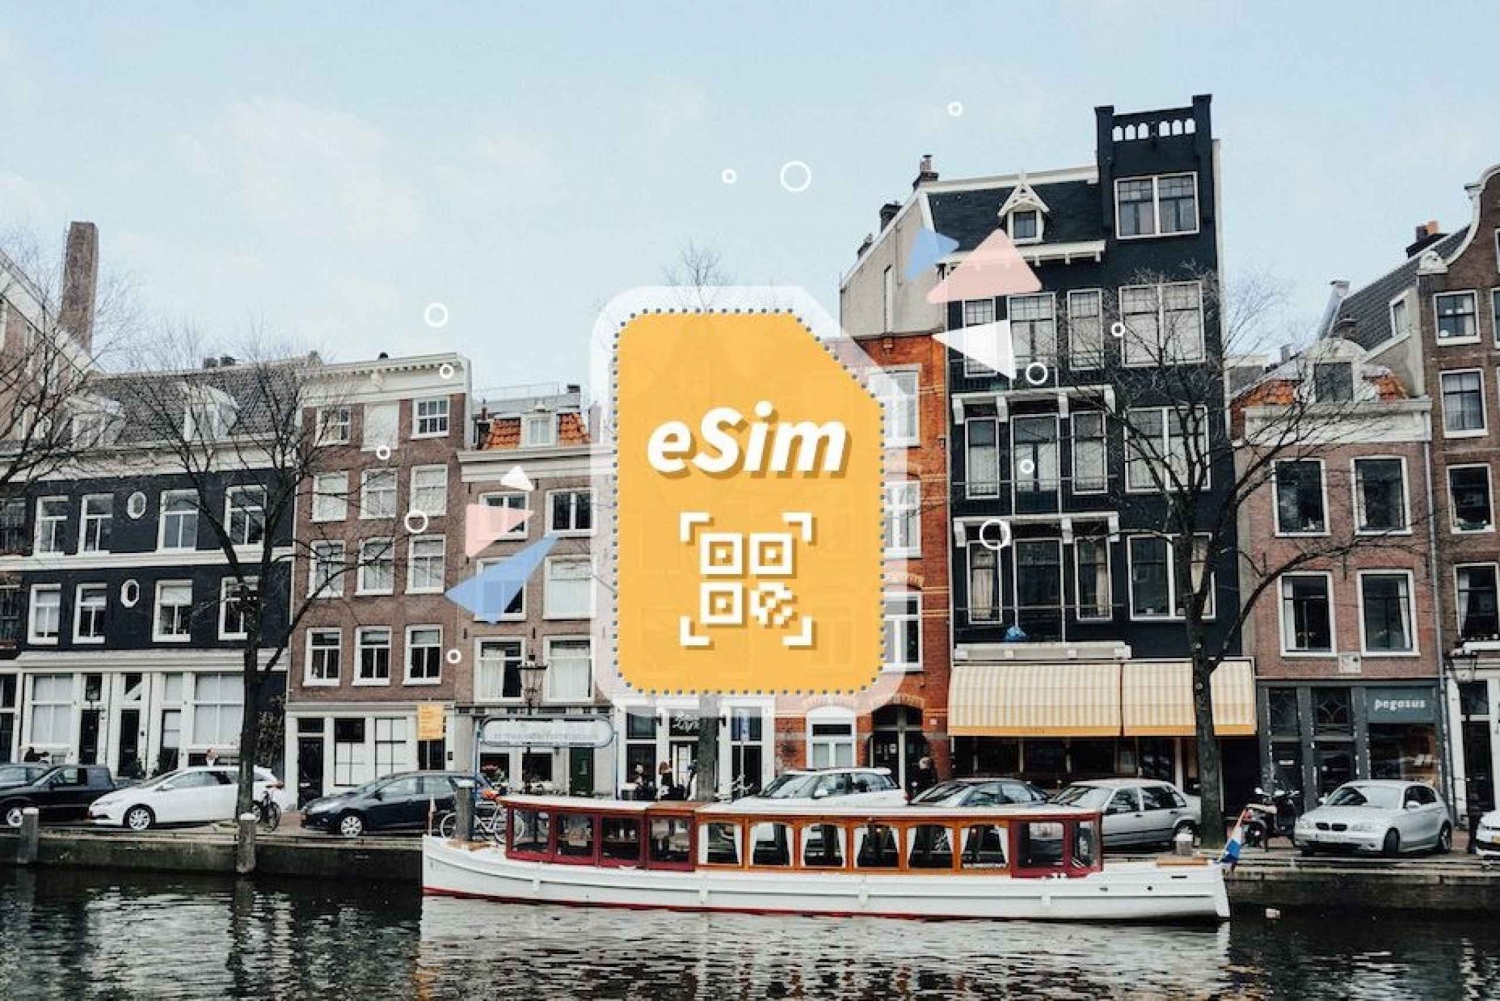 Paesi Bassi/Europa: piano dati mobile eSim